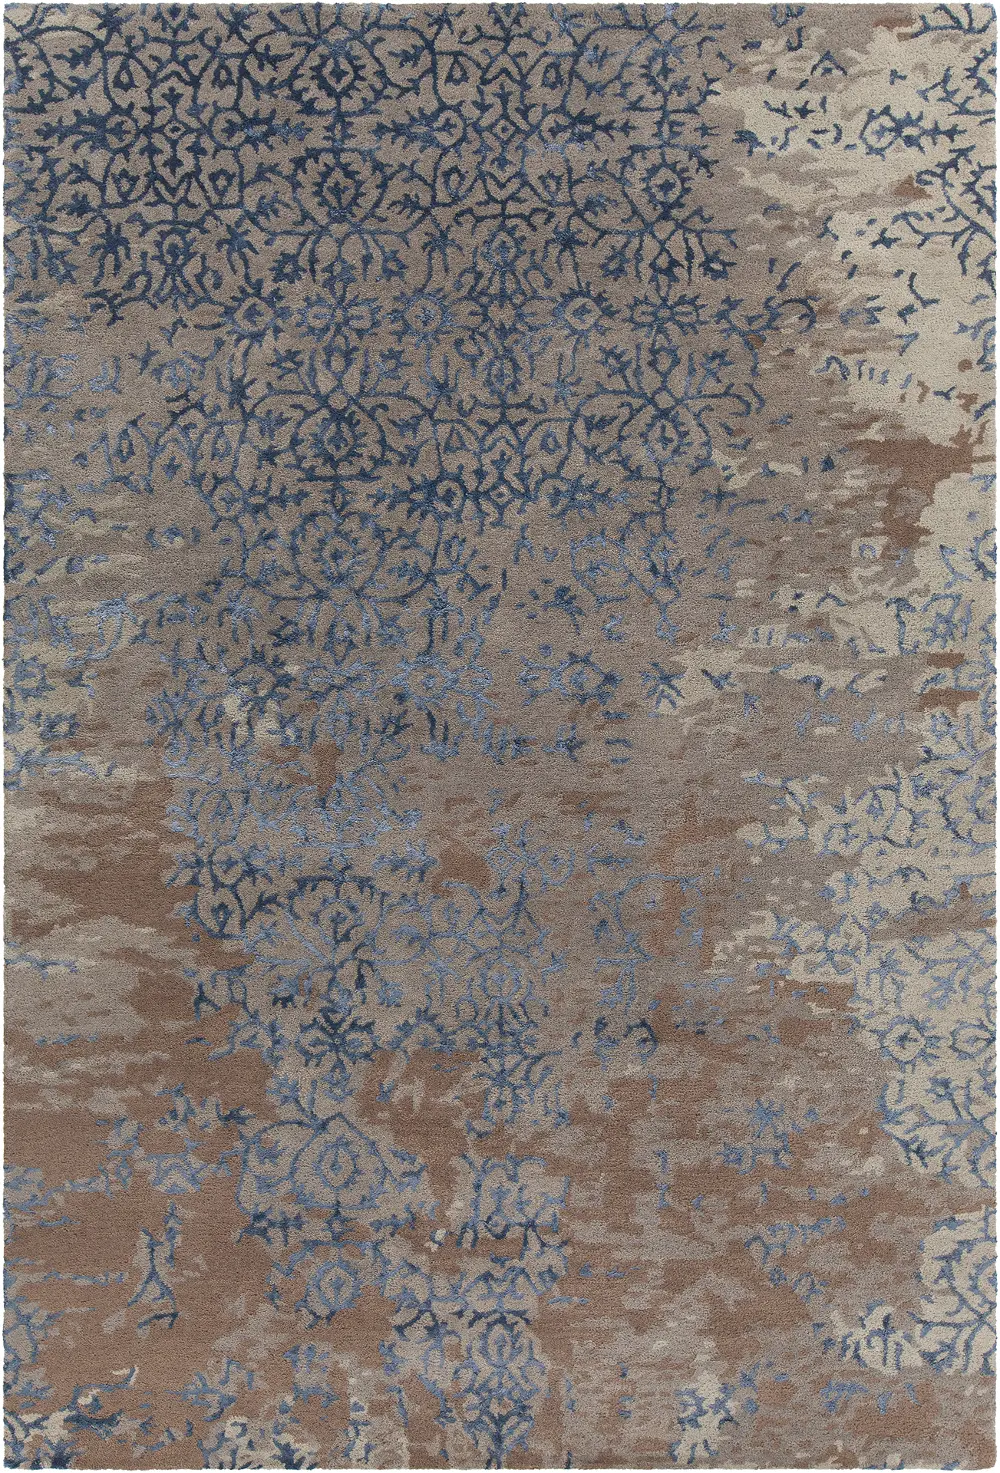 5 x 8 Medium Contemporary Gray, Brown and Blue Rug - Rupec-1